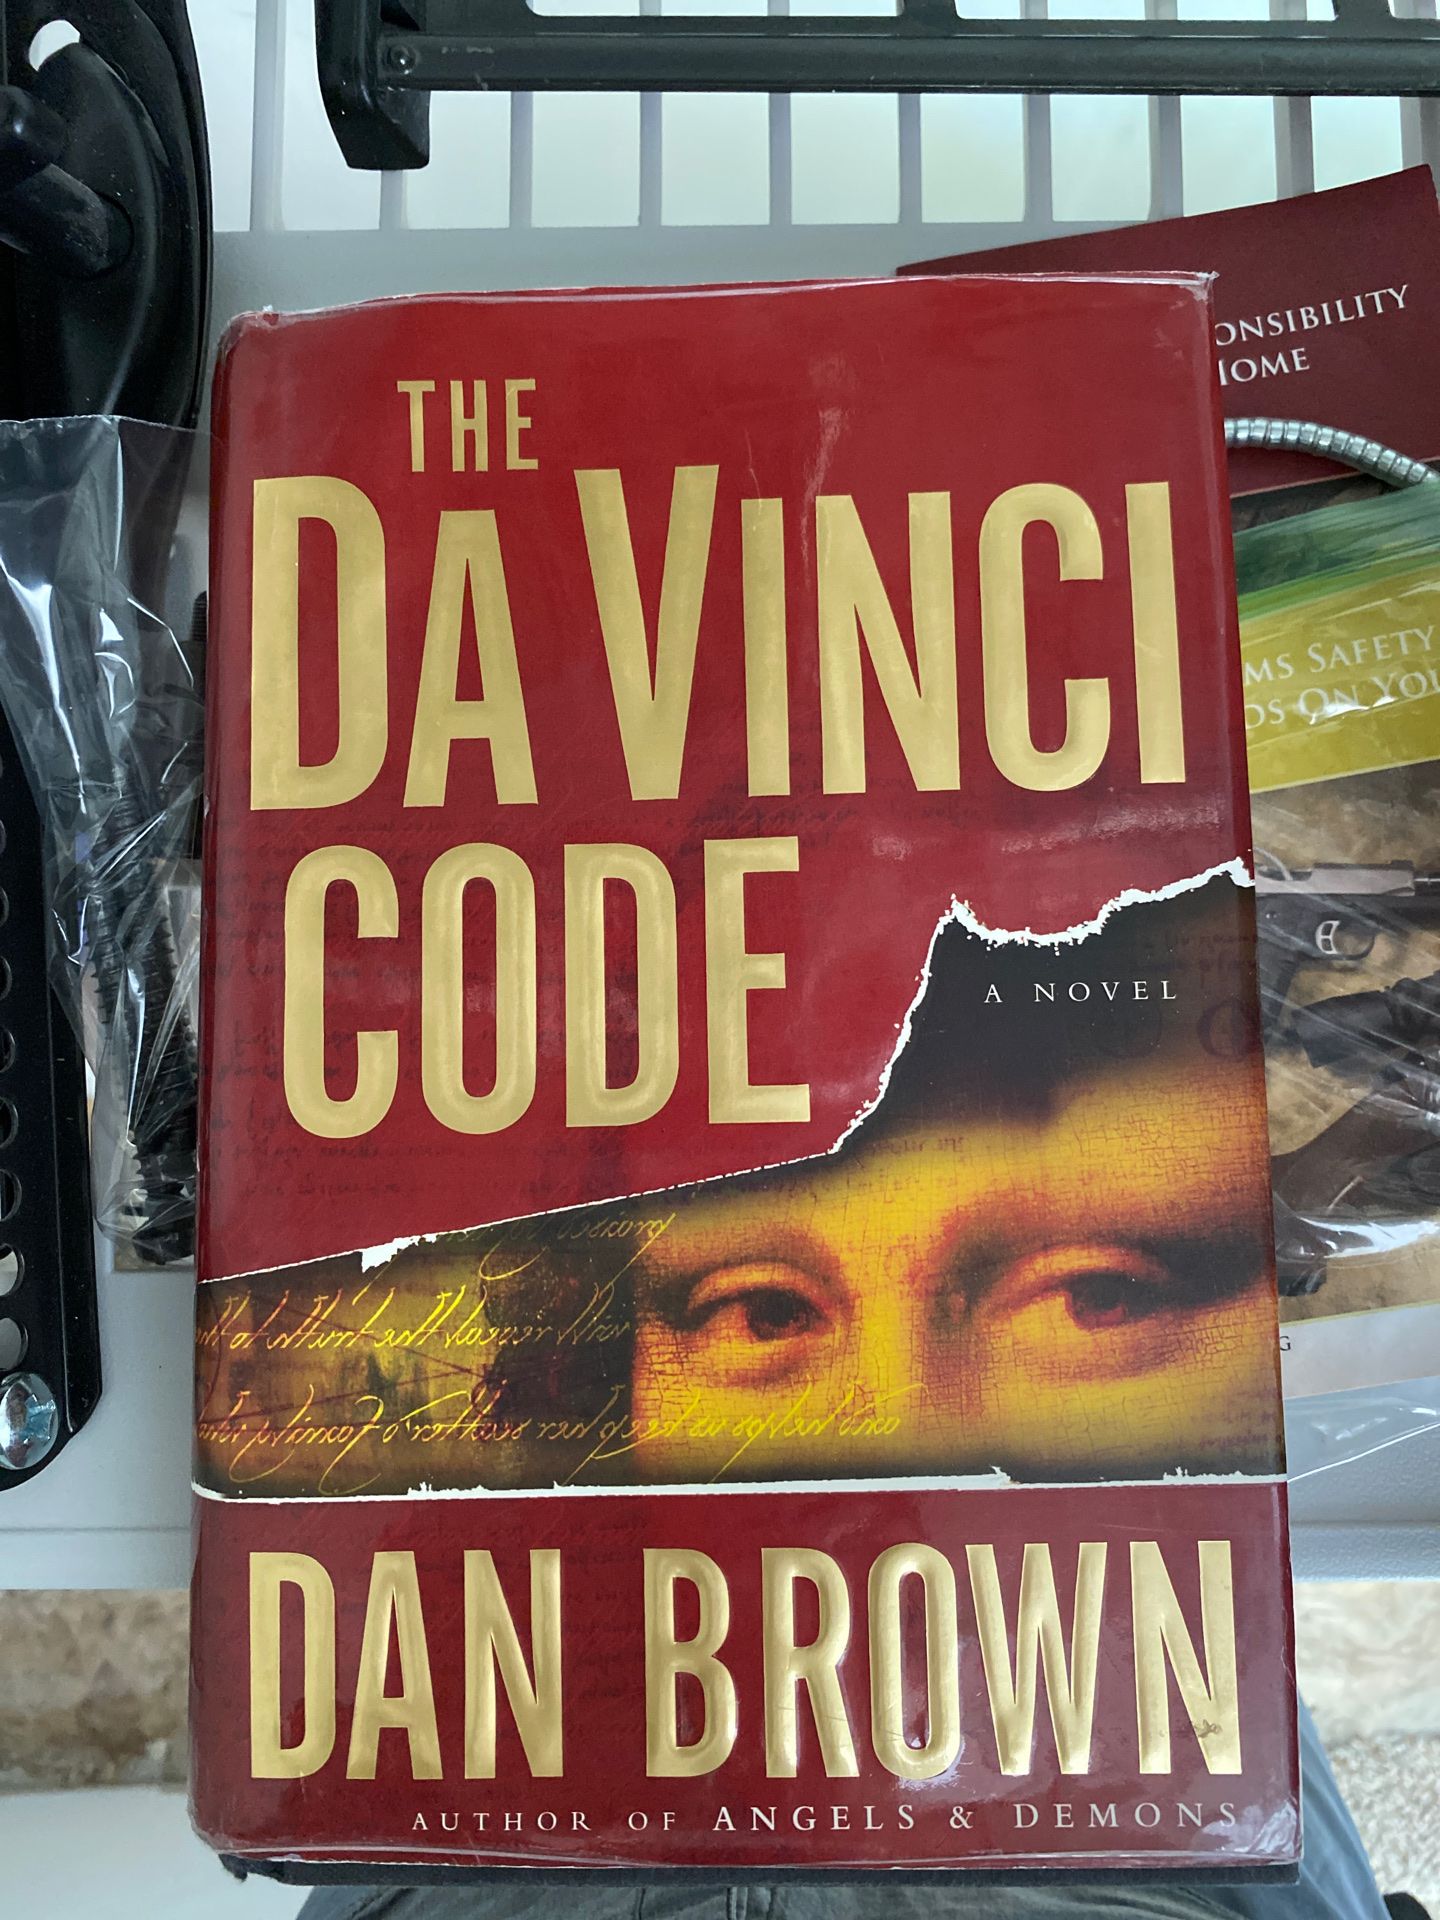 The da Vinci code